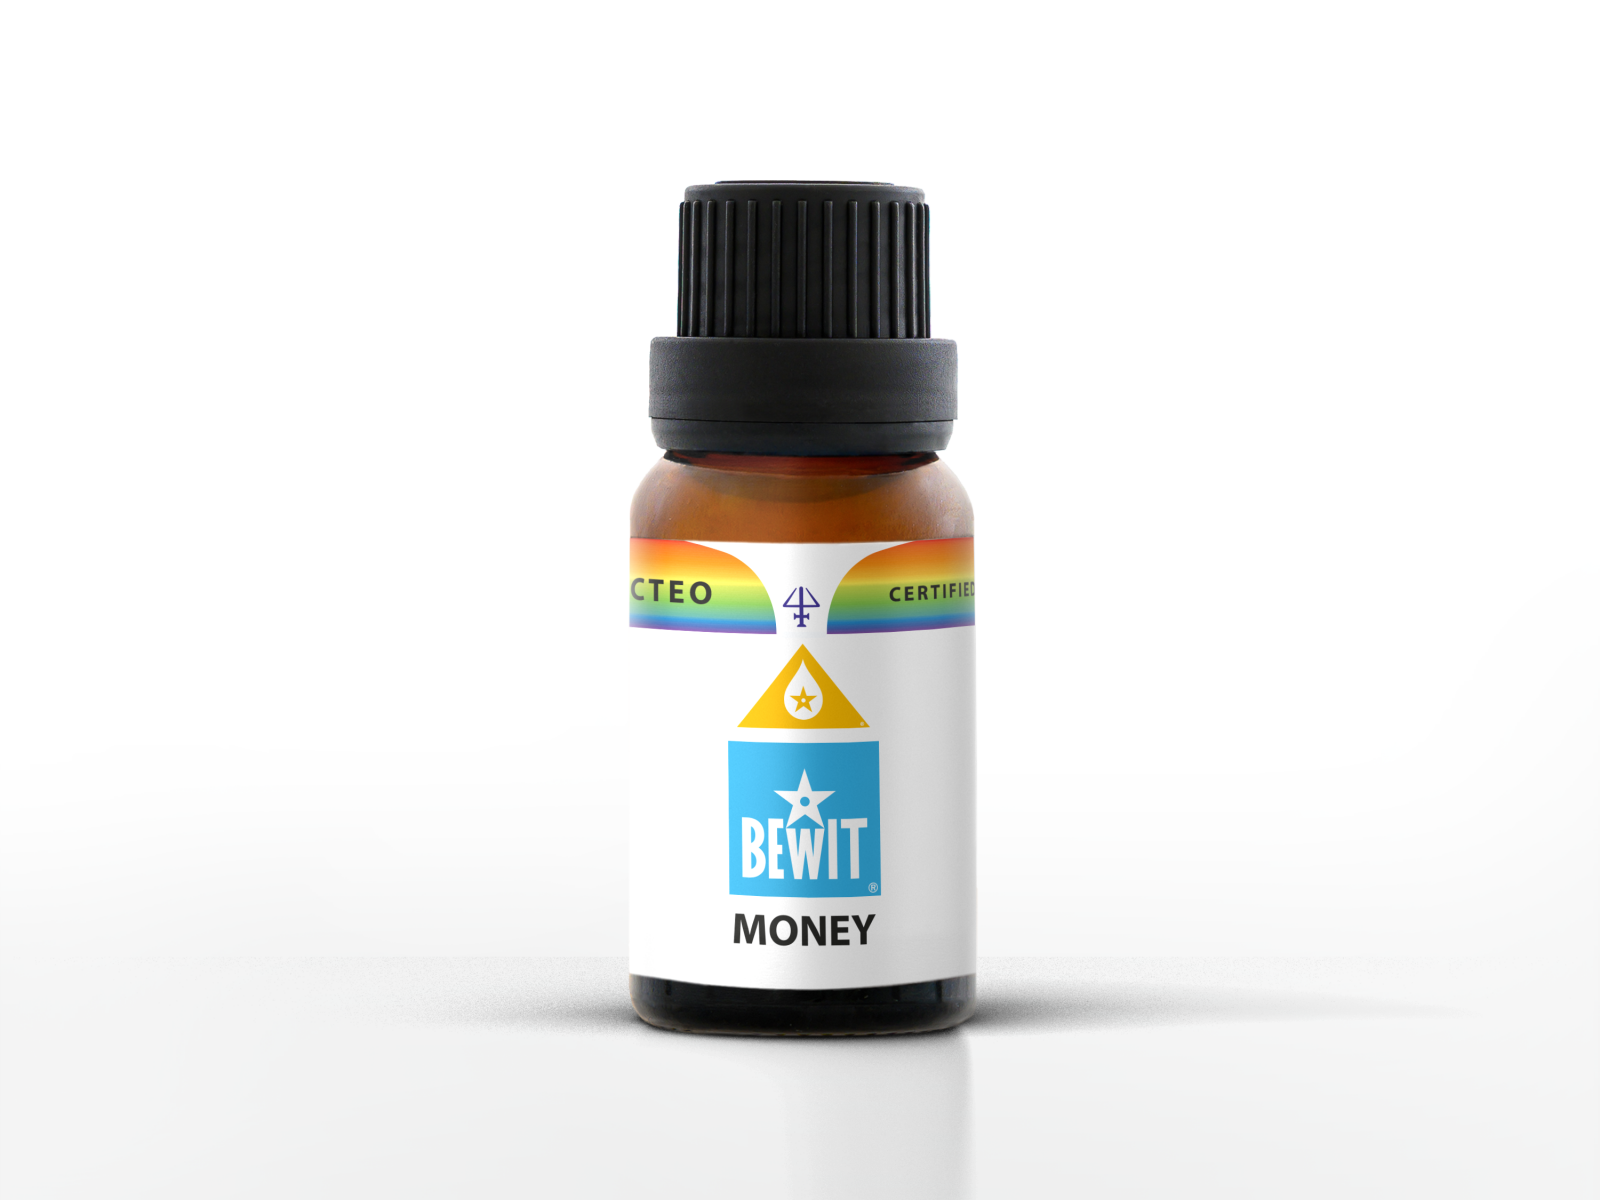 BEWIT MONEY - Blend of essential oils